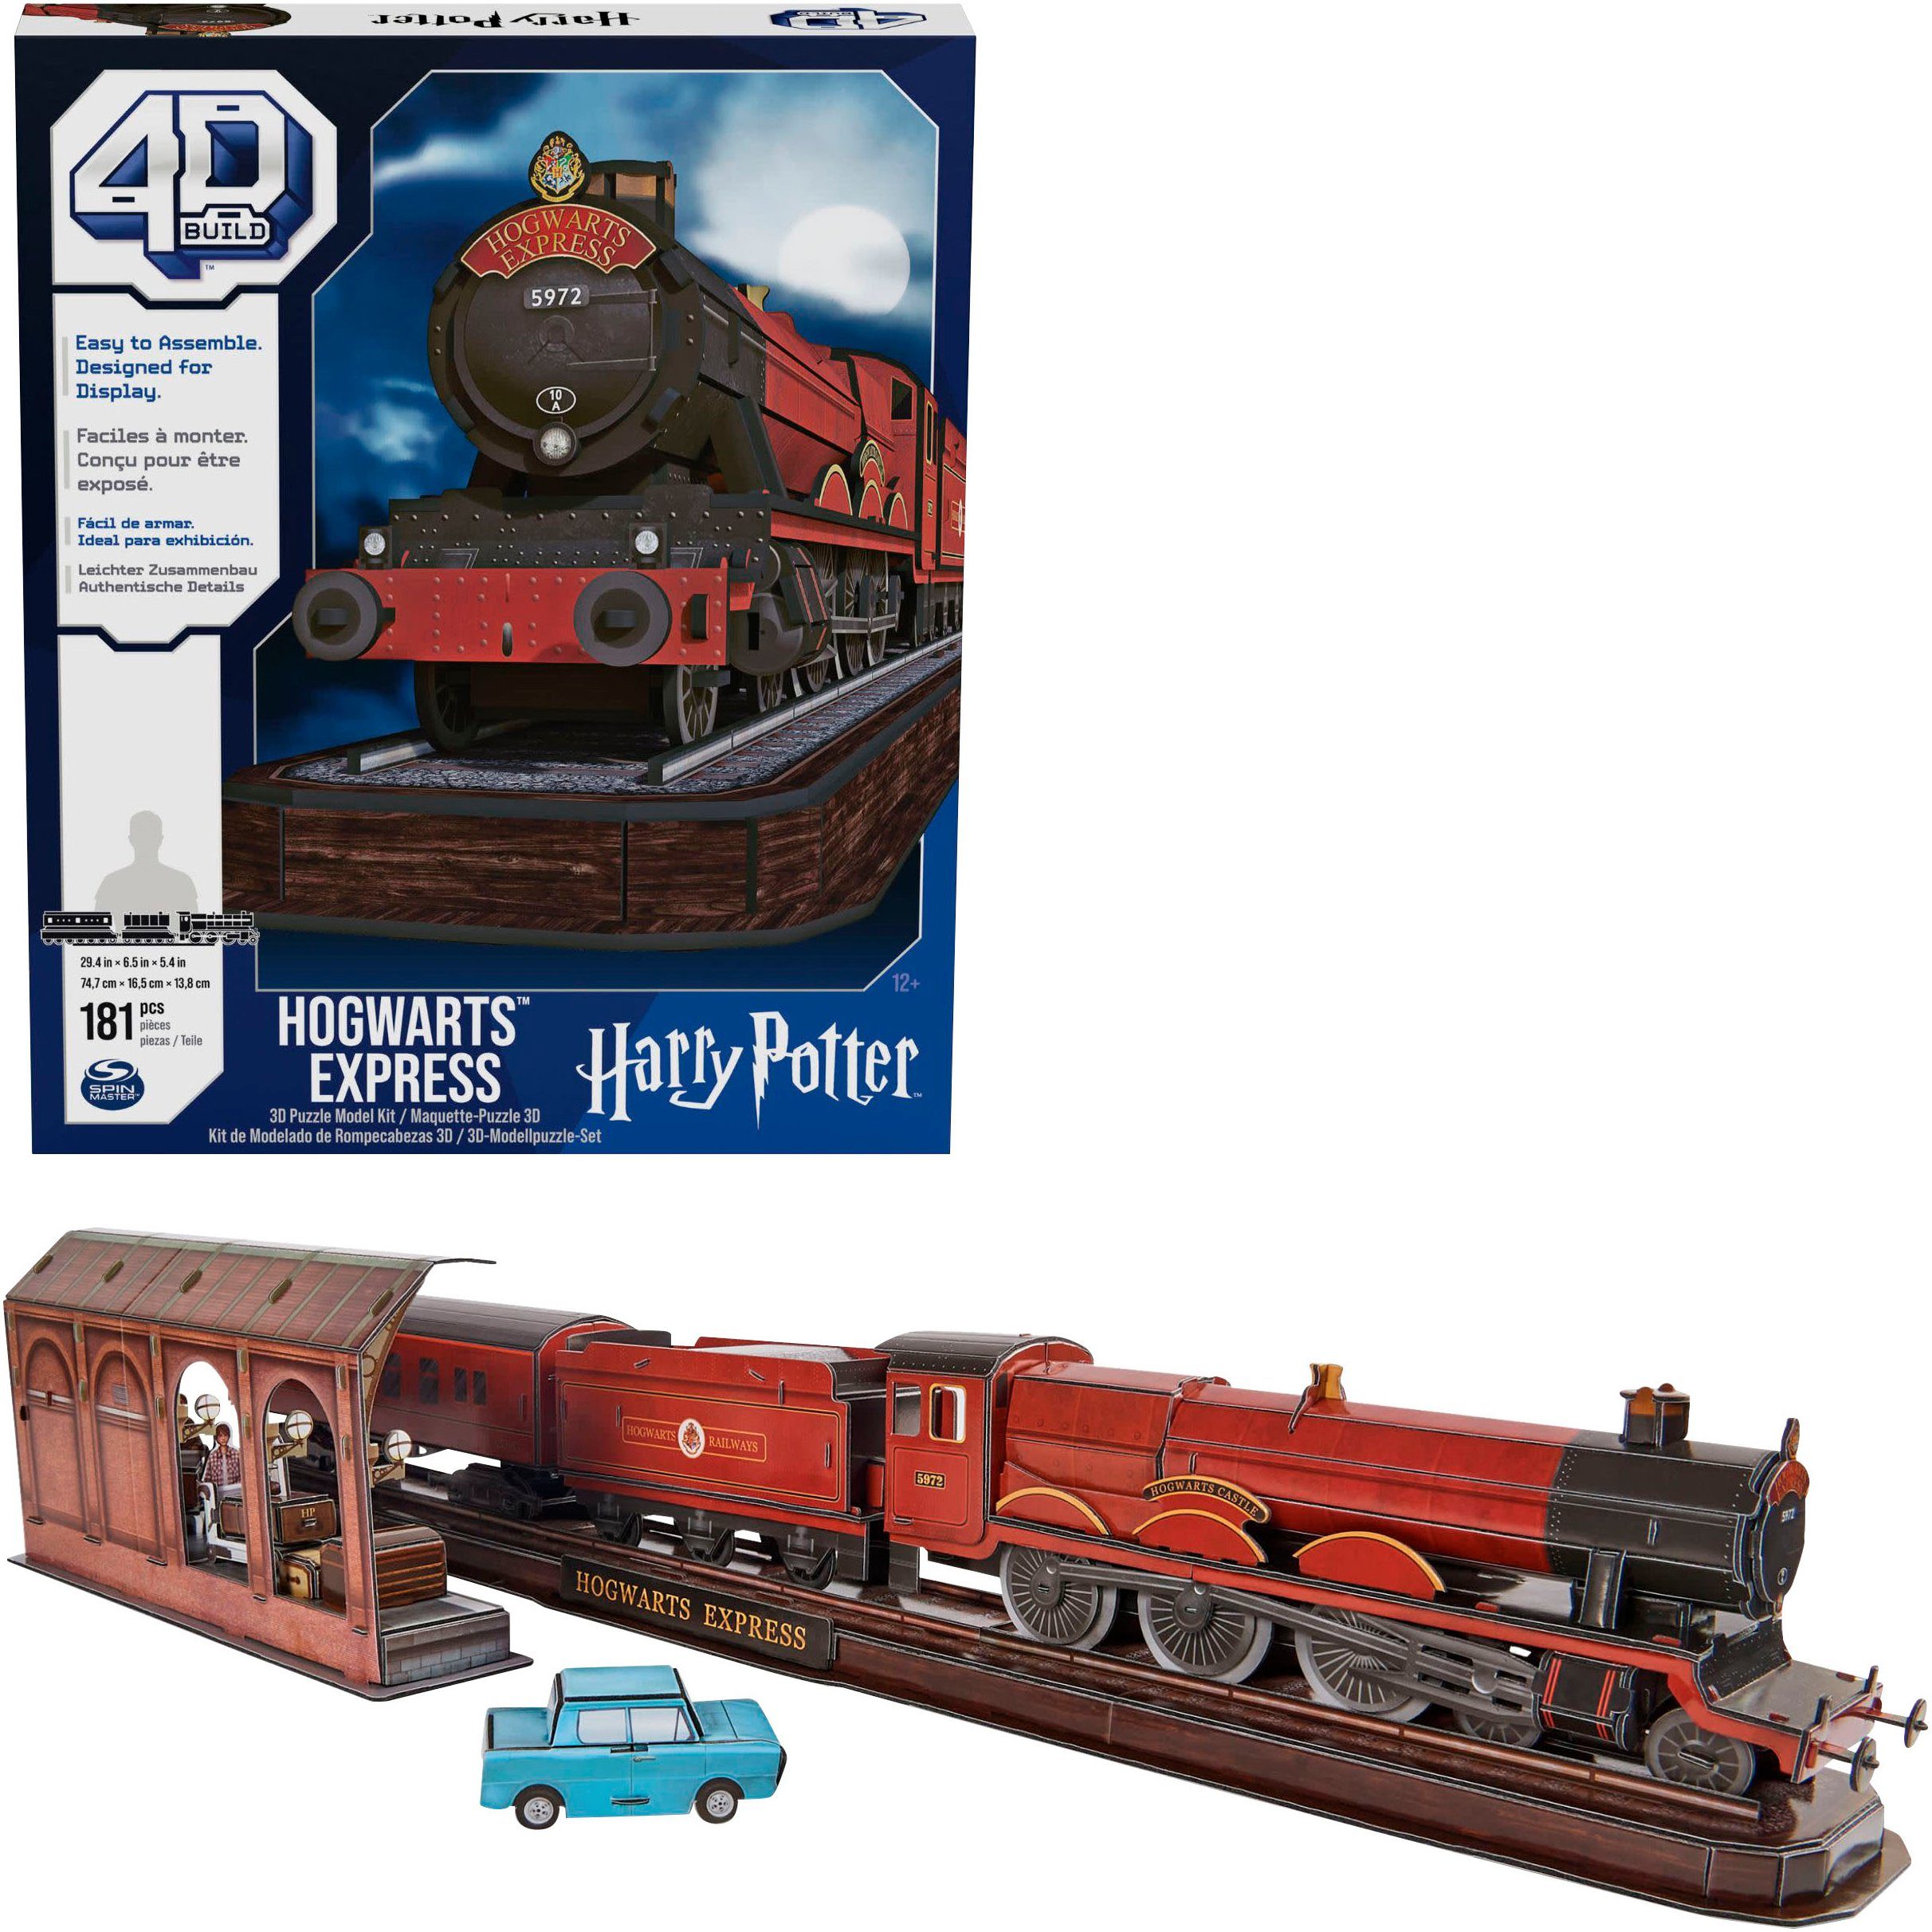 Spin Master 3D-Puzzle 4D Build - Harry Potter - Hogwarts Express, 181 Puzzleteile